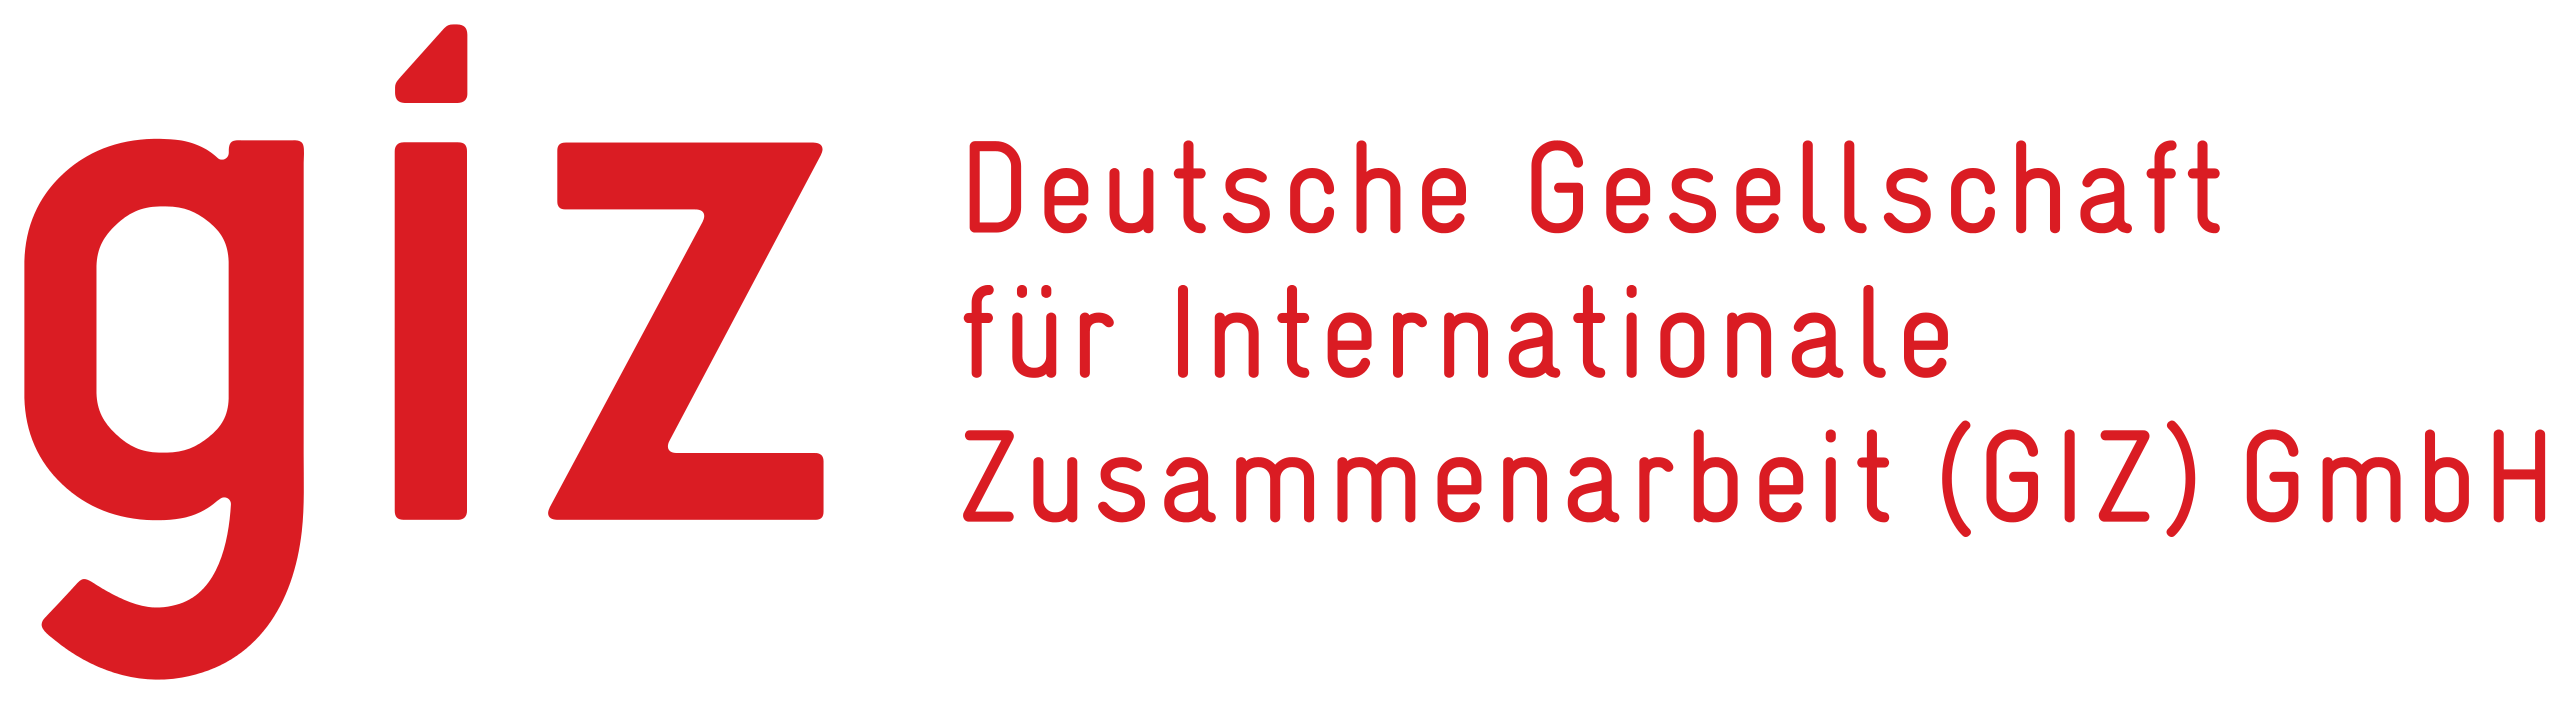 GIZ GmbH